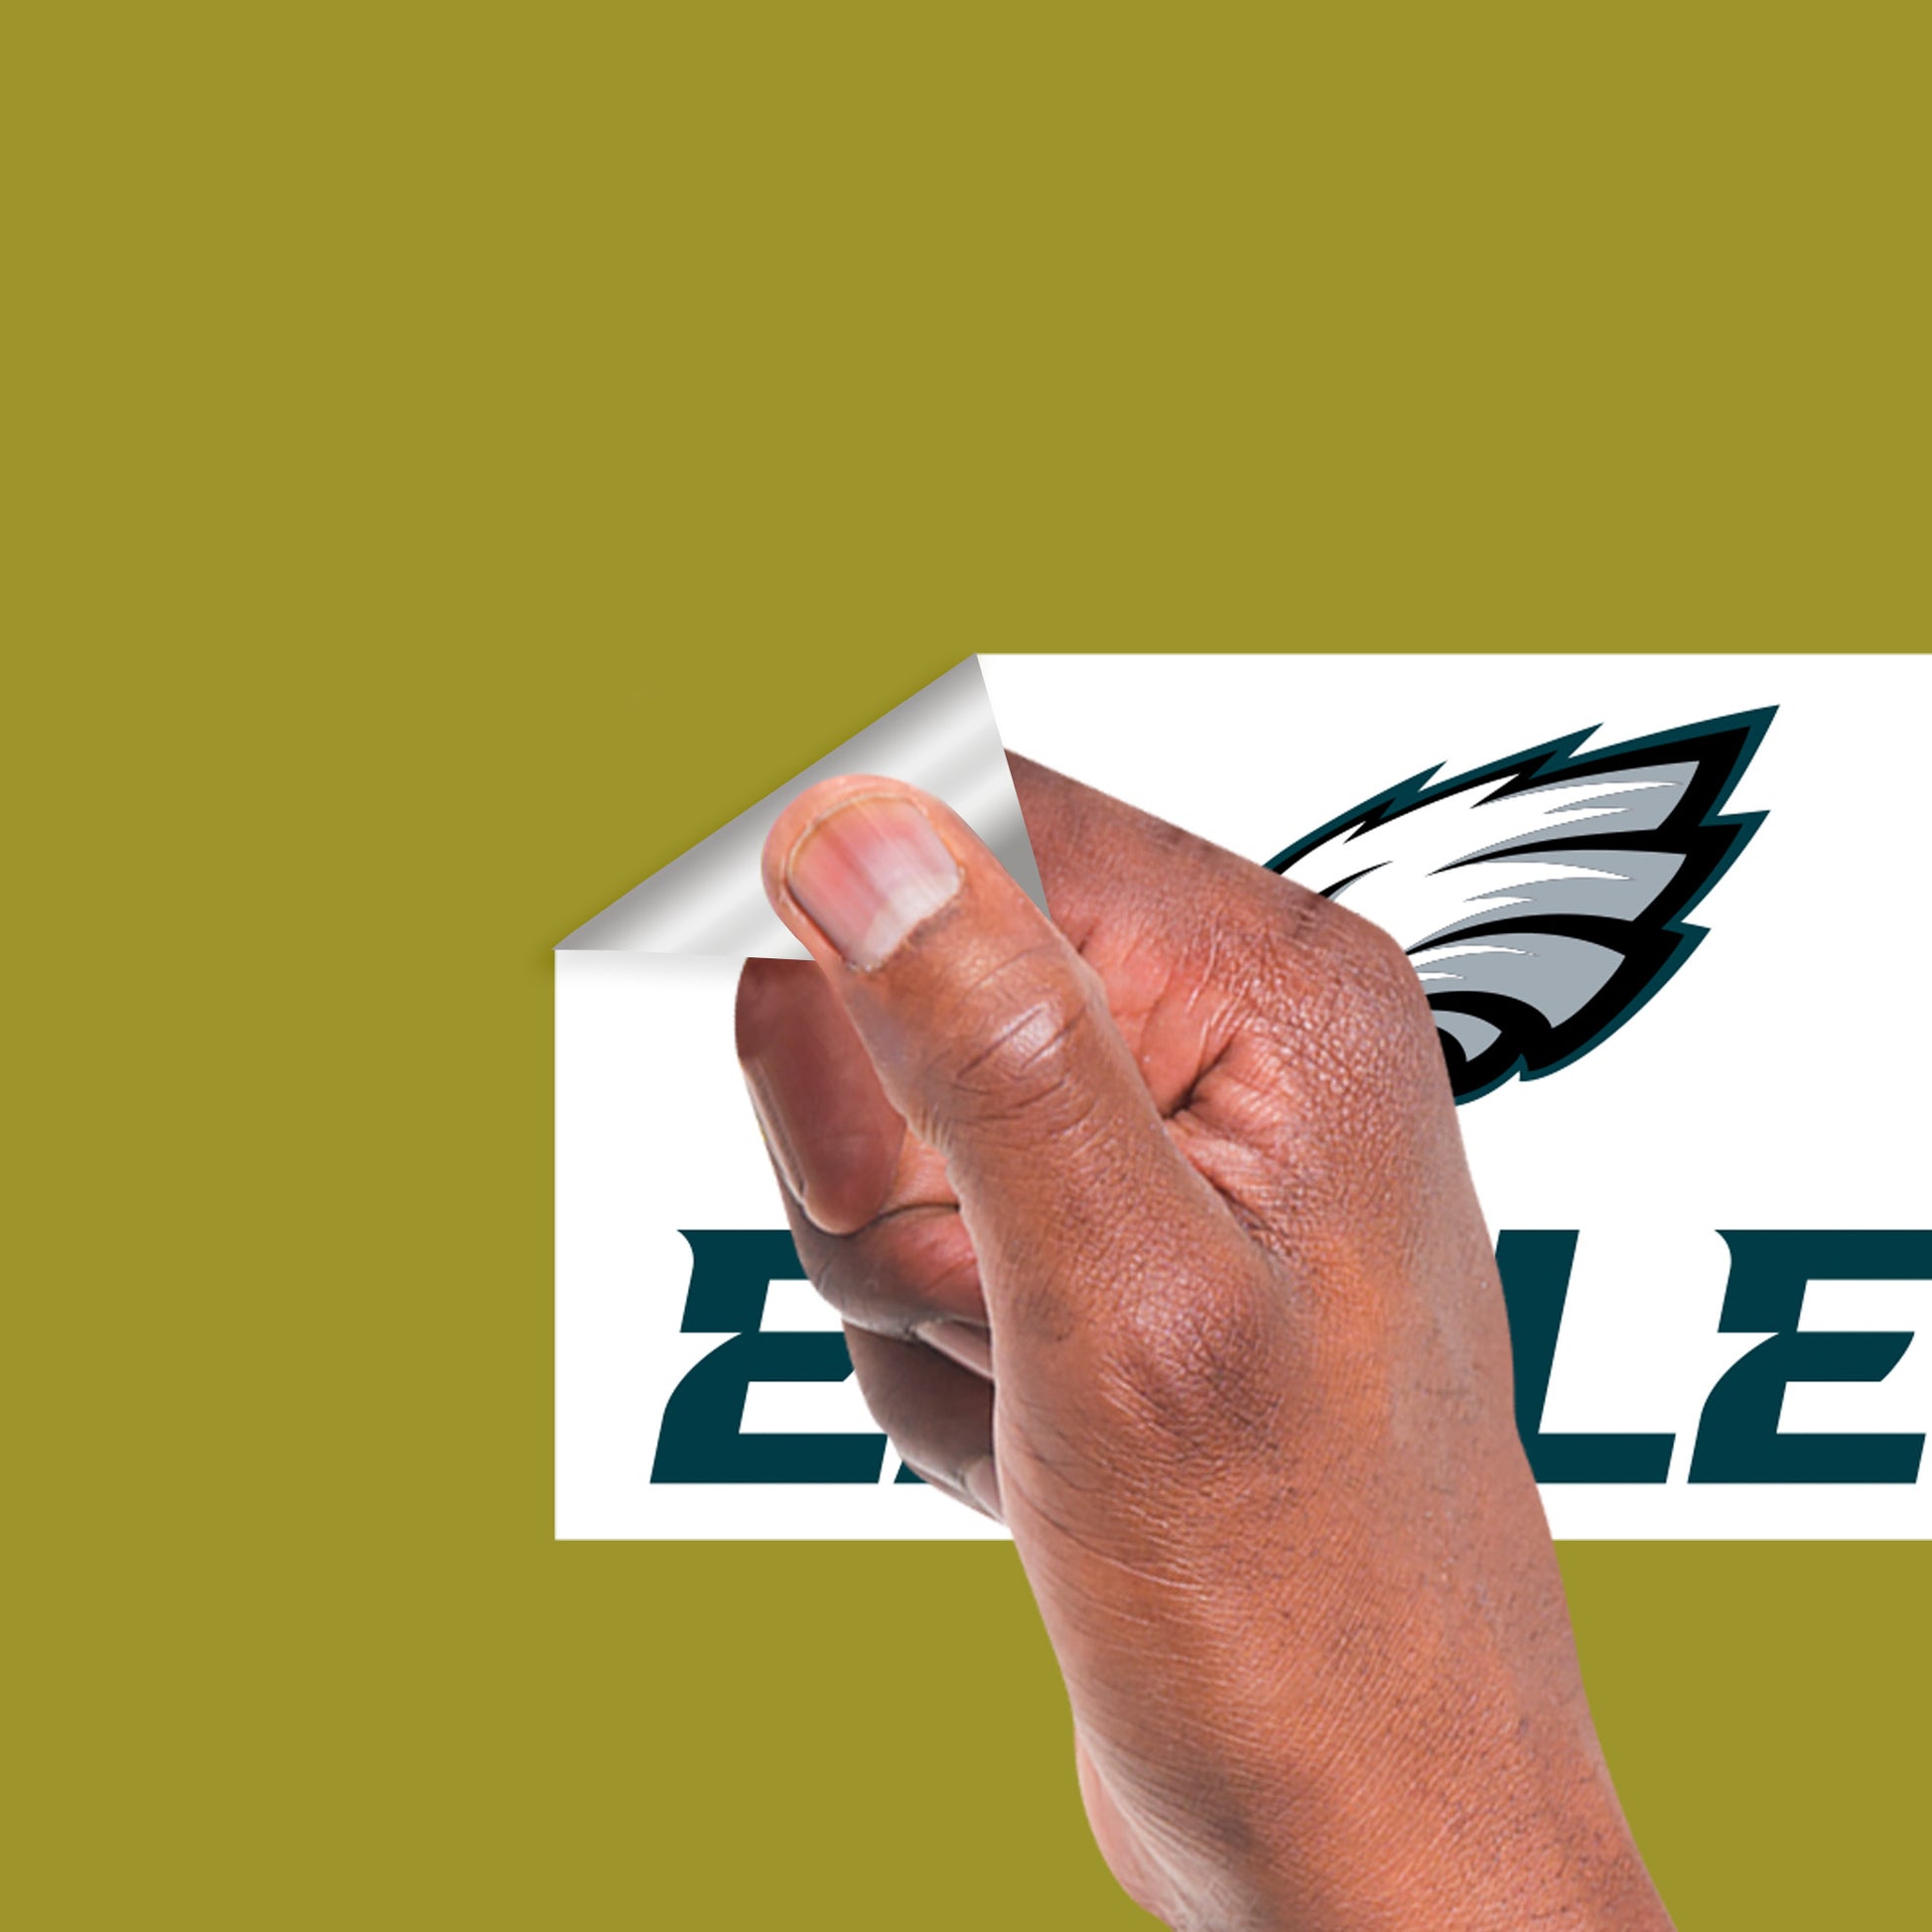 Philadelphia Eagles Jersey - Jason Kelce - Limited Sizes